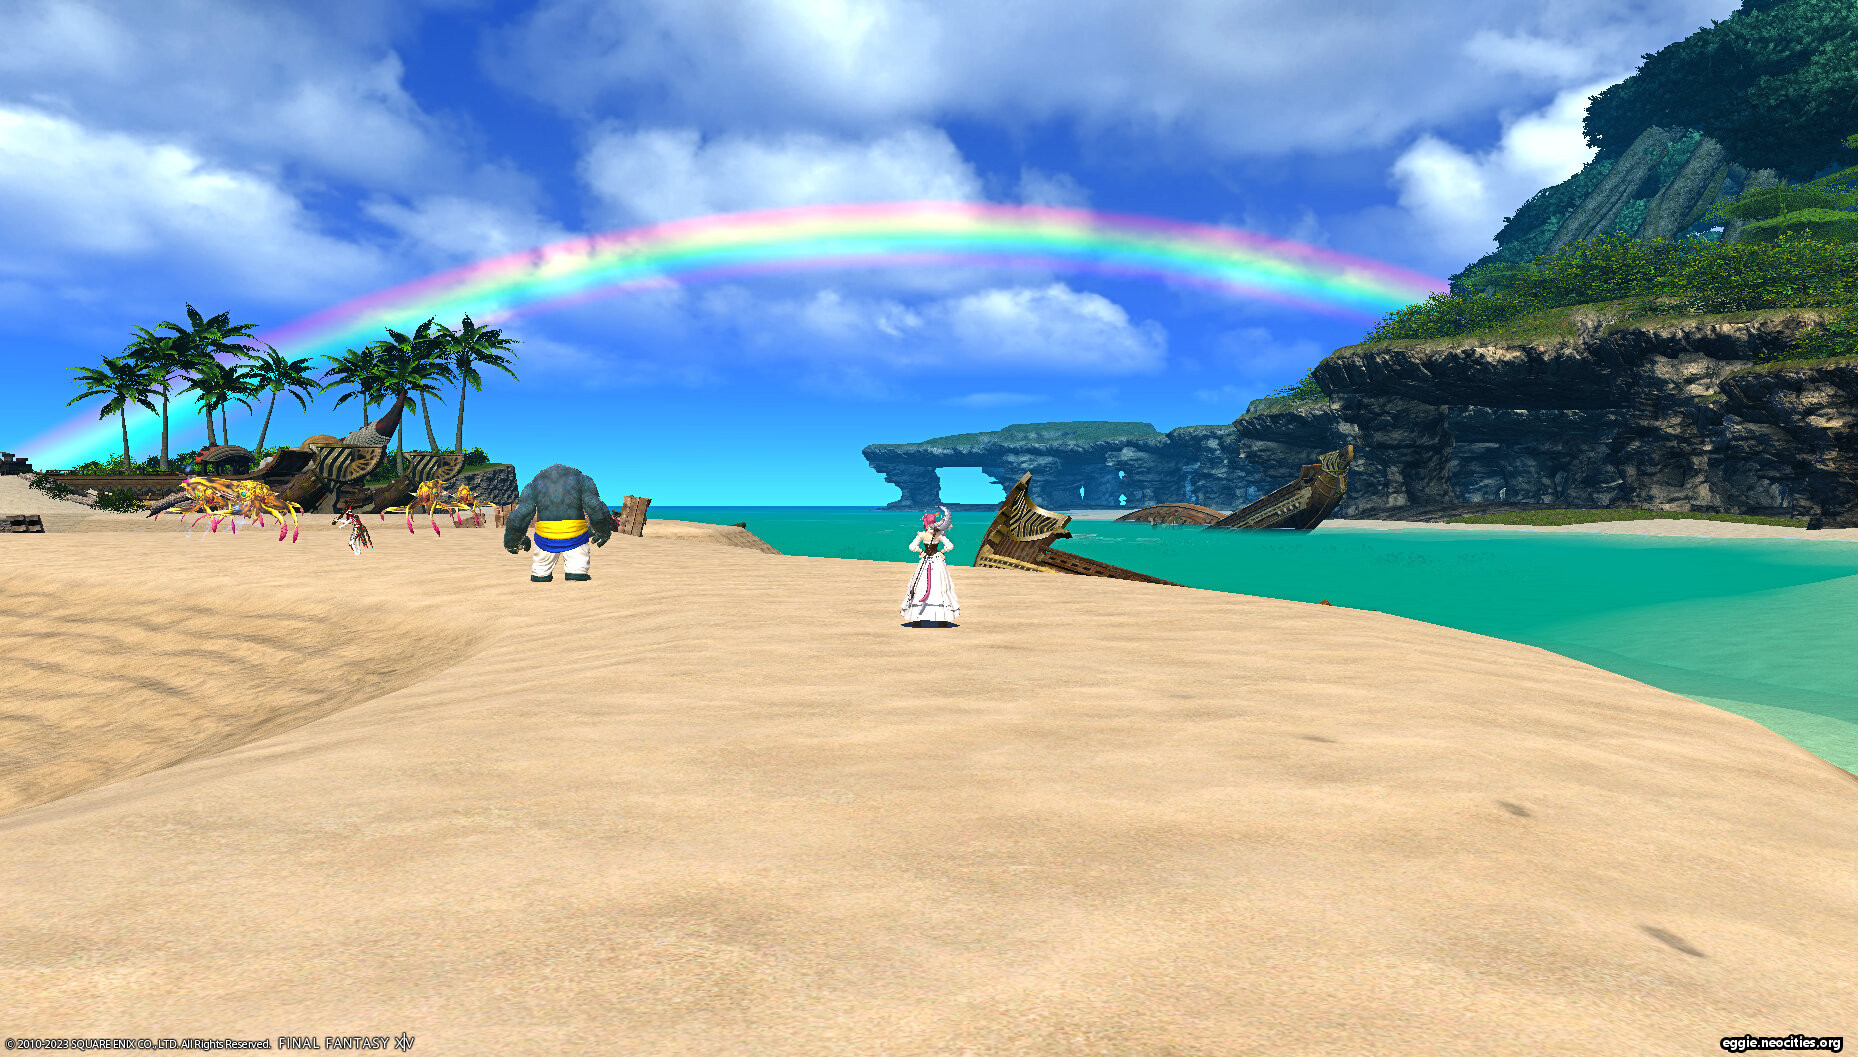 Zel standing on the beach on Aloalo, admiring a rainbow.